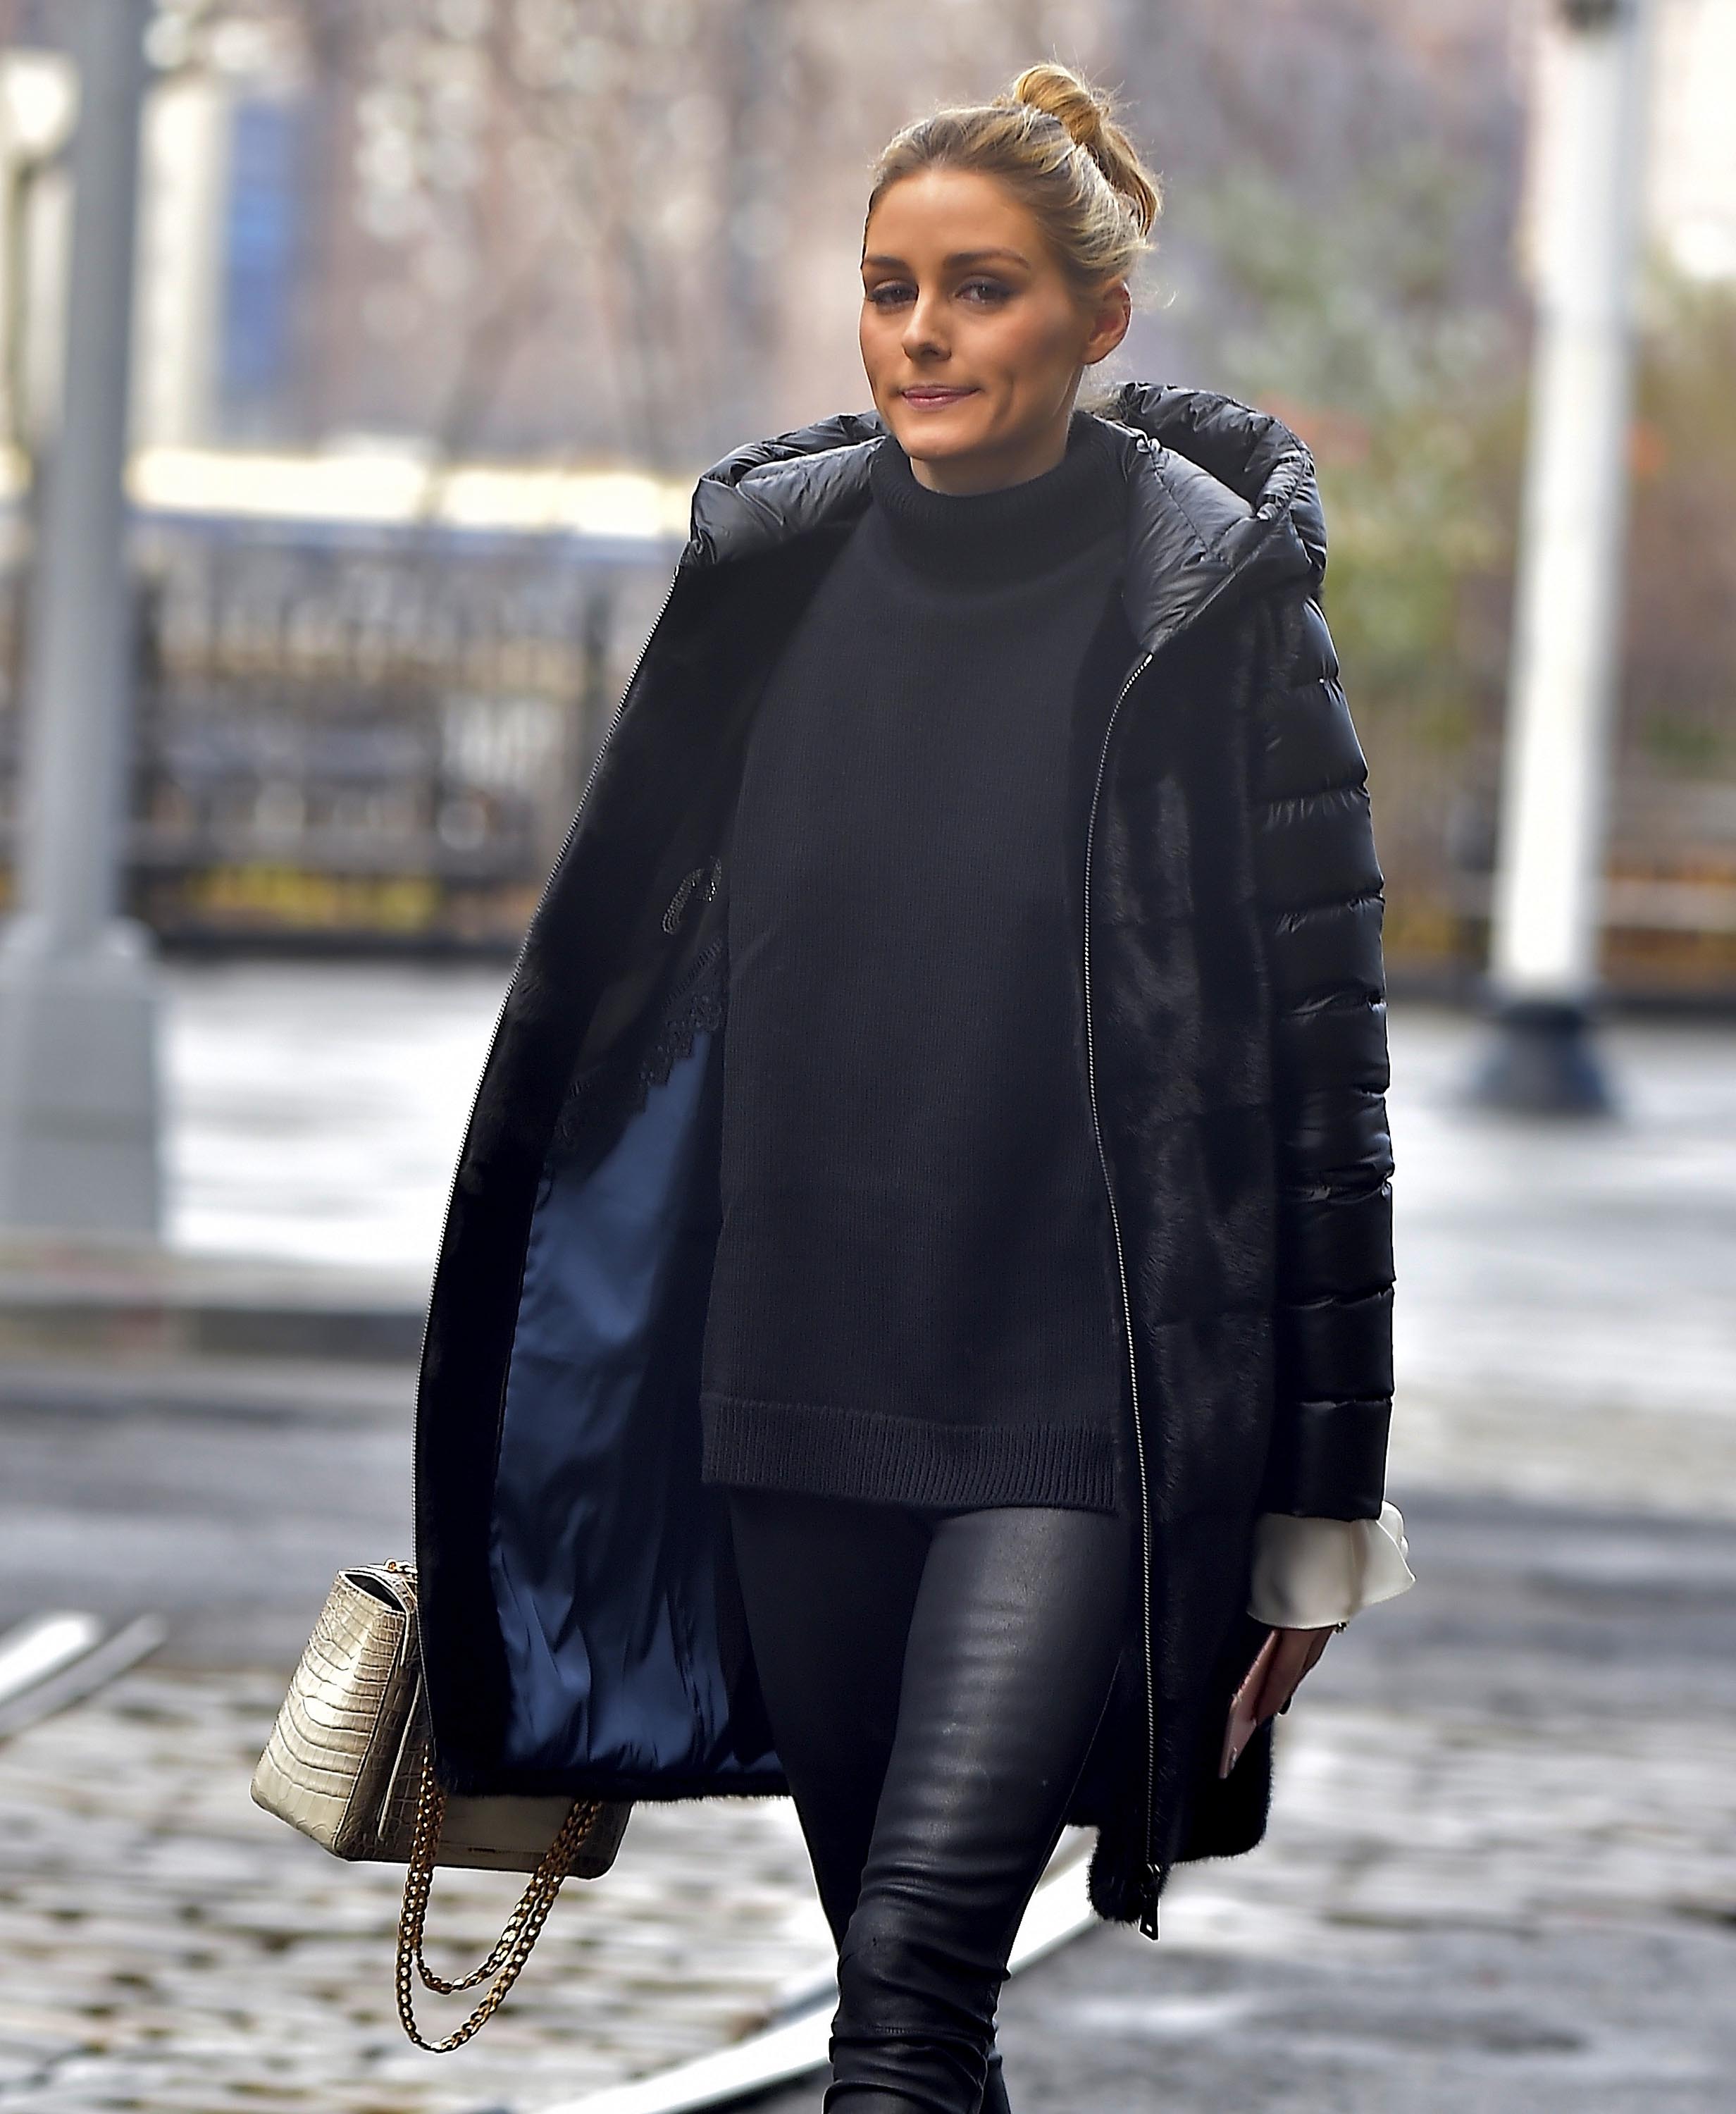 Olivia Palermo is seen in Brooklyn